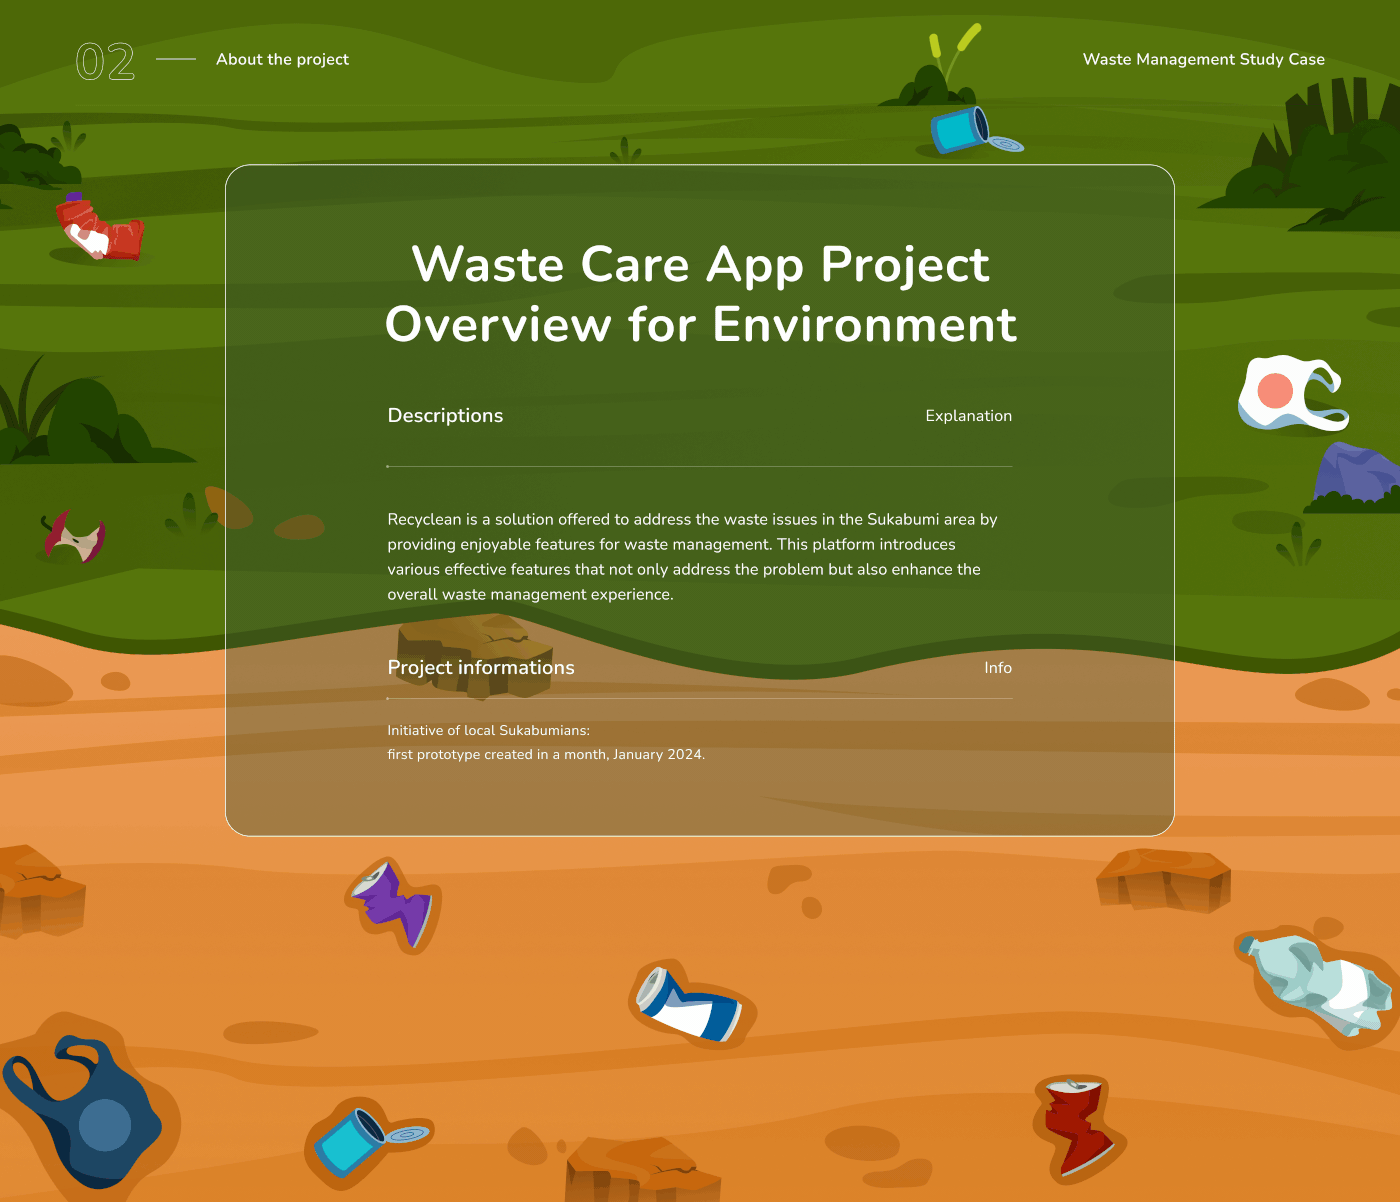 Description of the waste care app project.